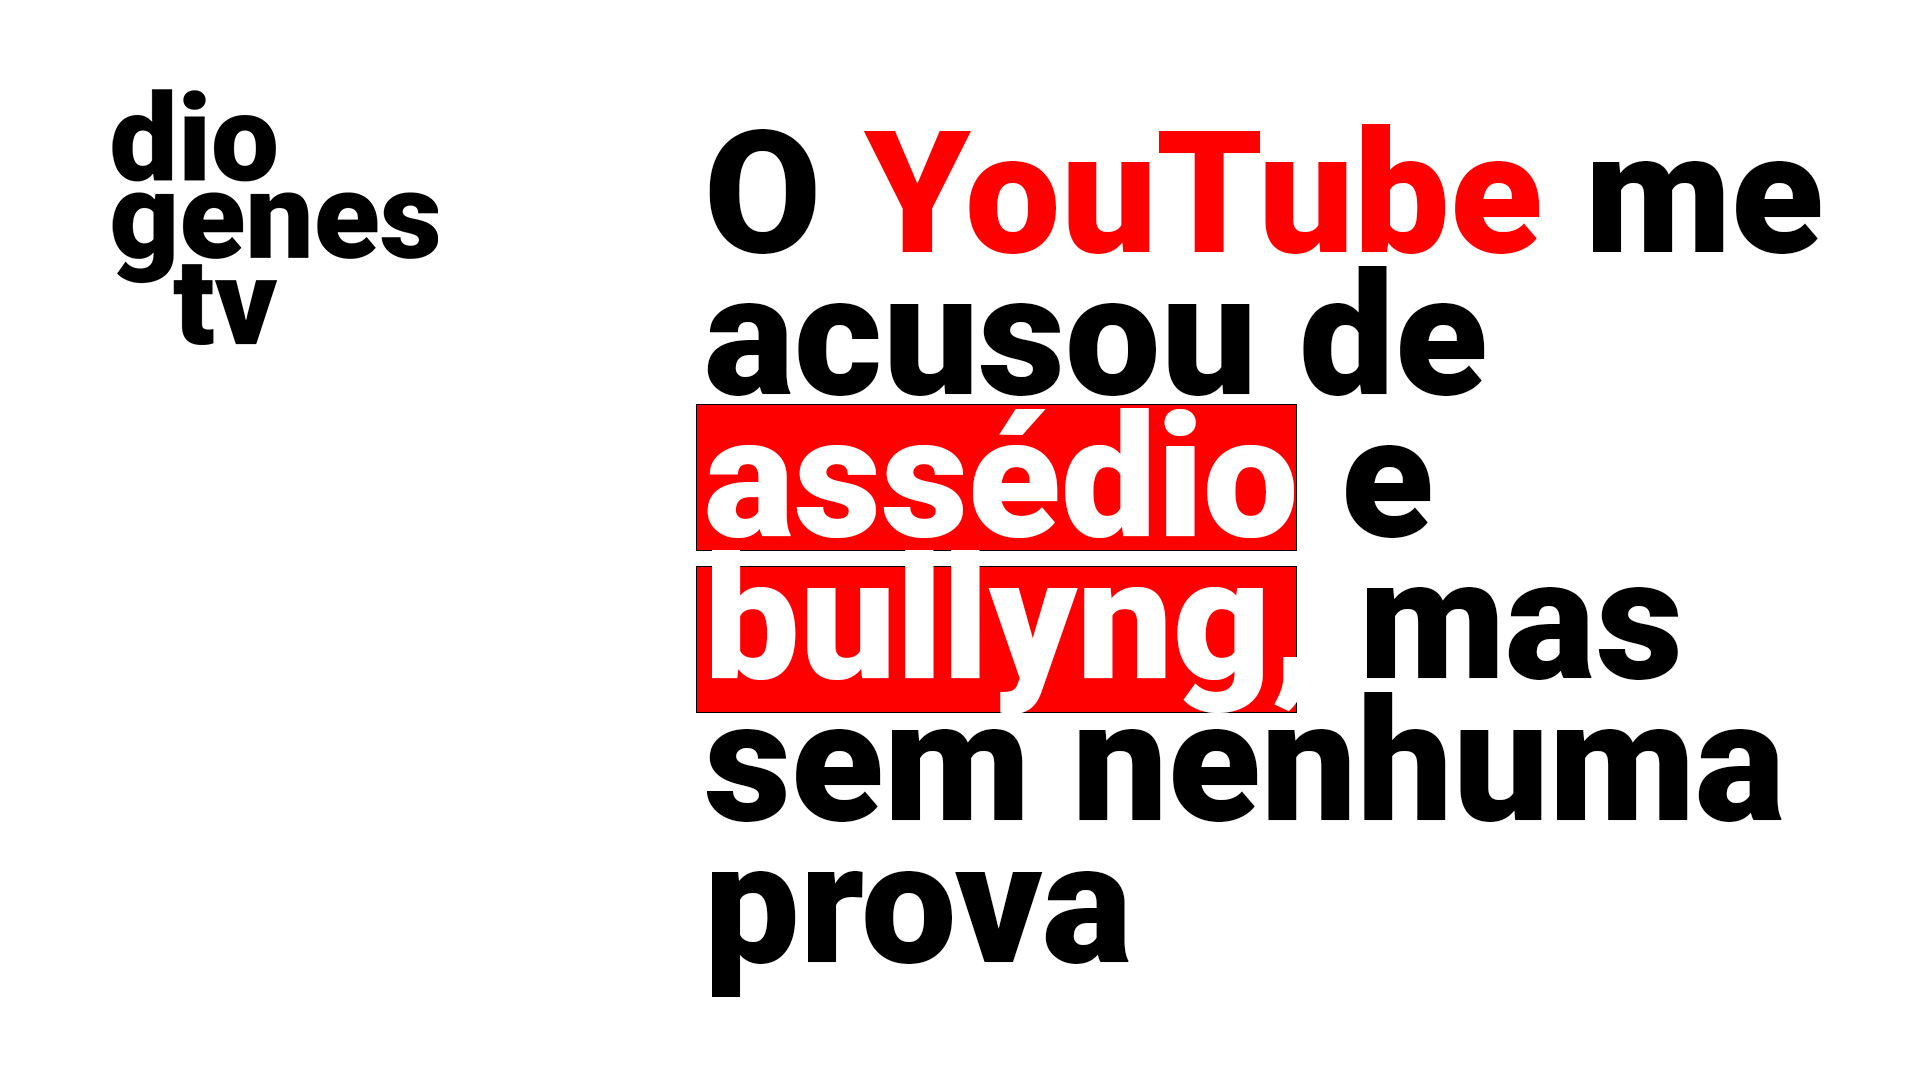 O YouTube me acusou de assédio e bullyng, mas sem nenhuma prova